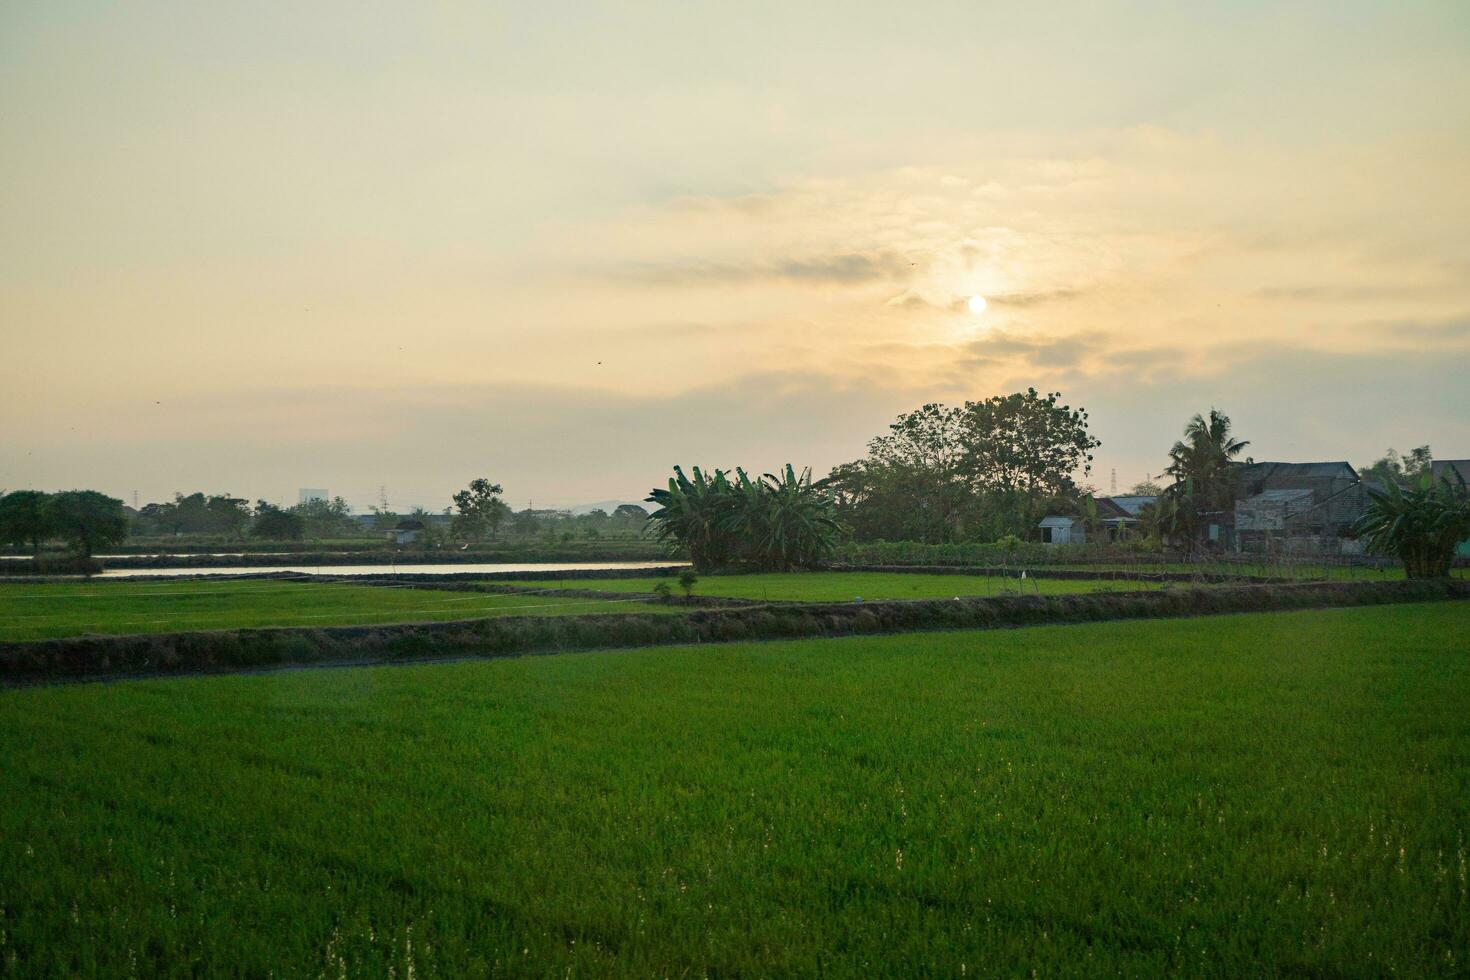 rijst- veld- met zonsondergang lucht achtergrond. foto